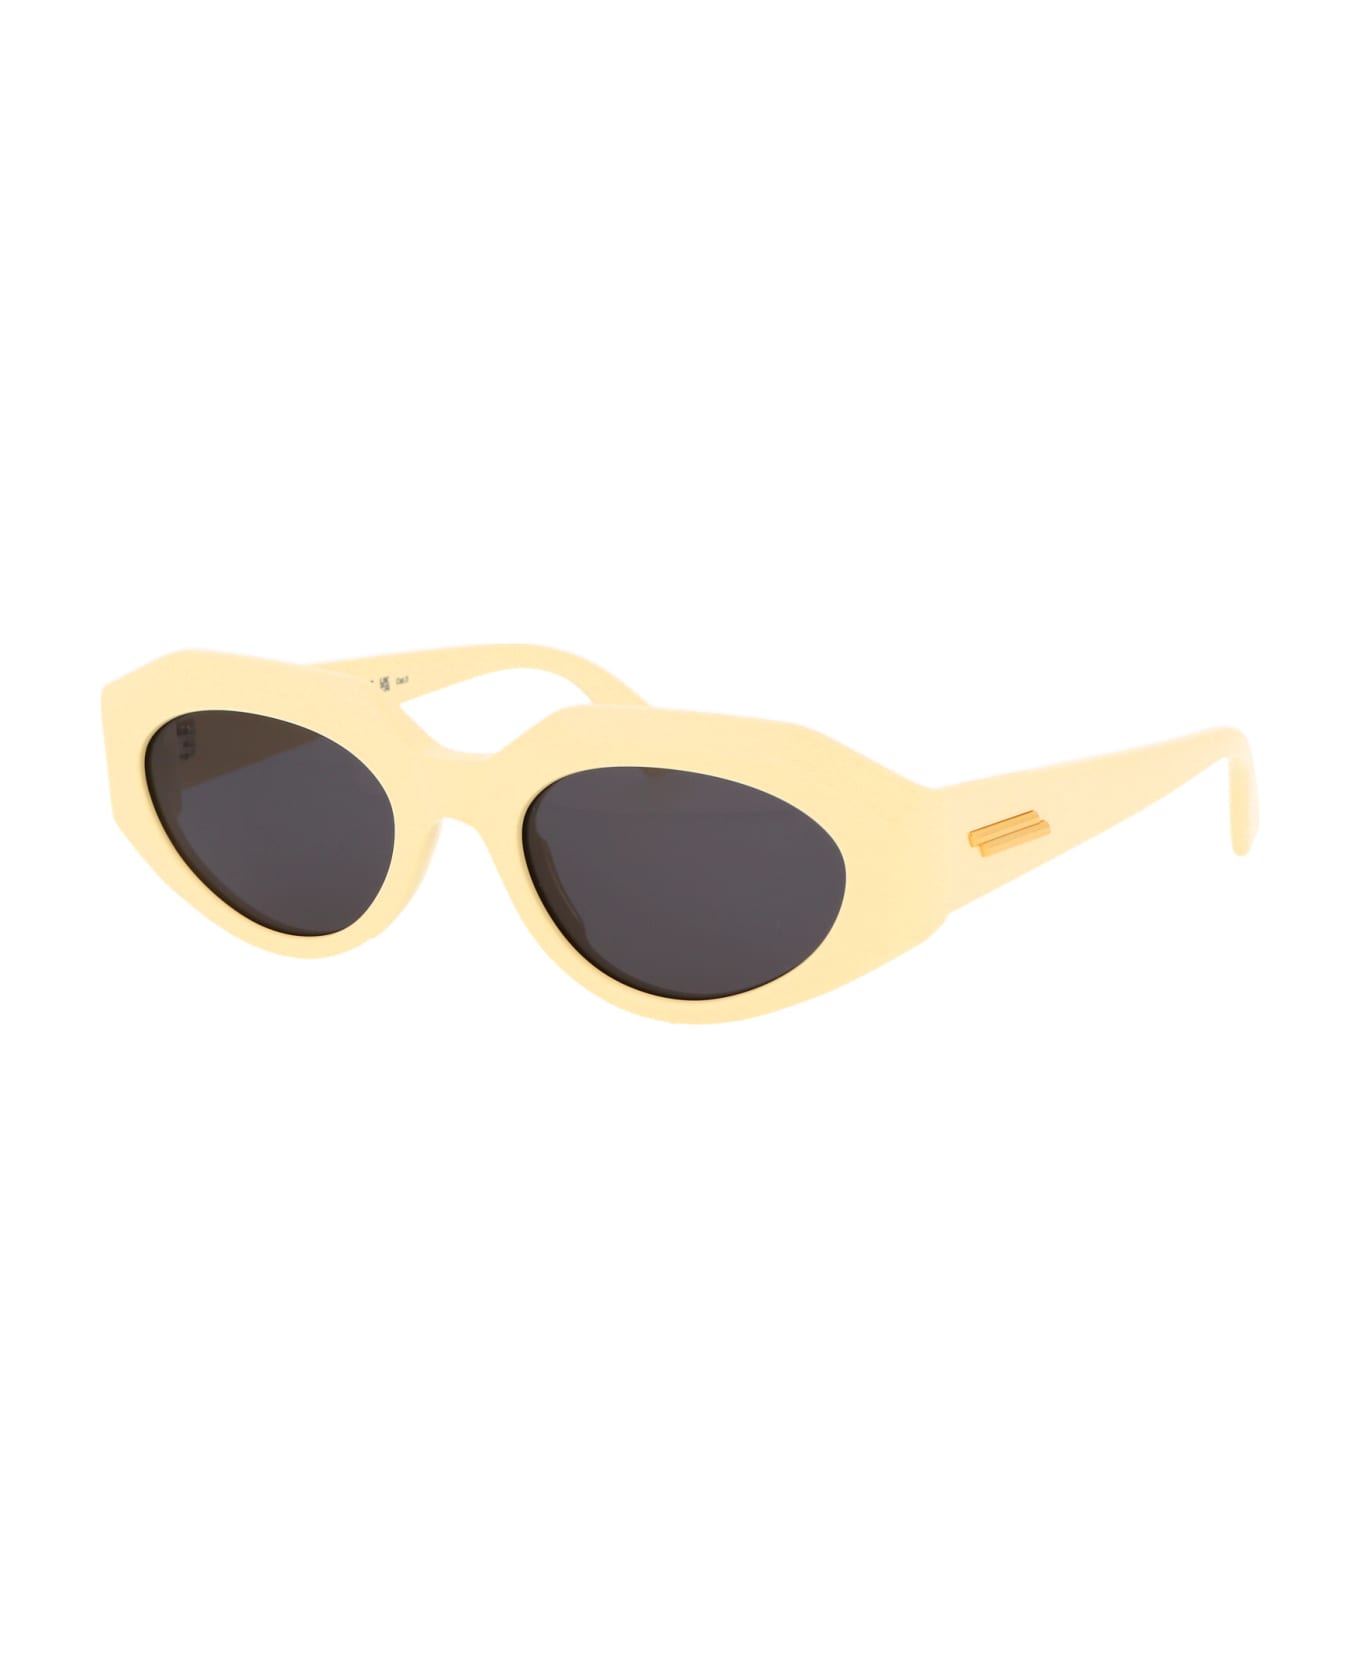 Bottega Veneta Eyewear Bv1031s Sunglasses - 006 YELLOW YELLOW GREY